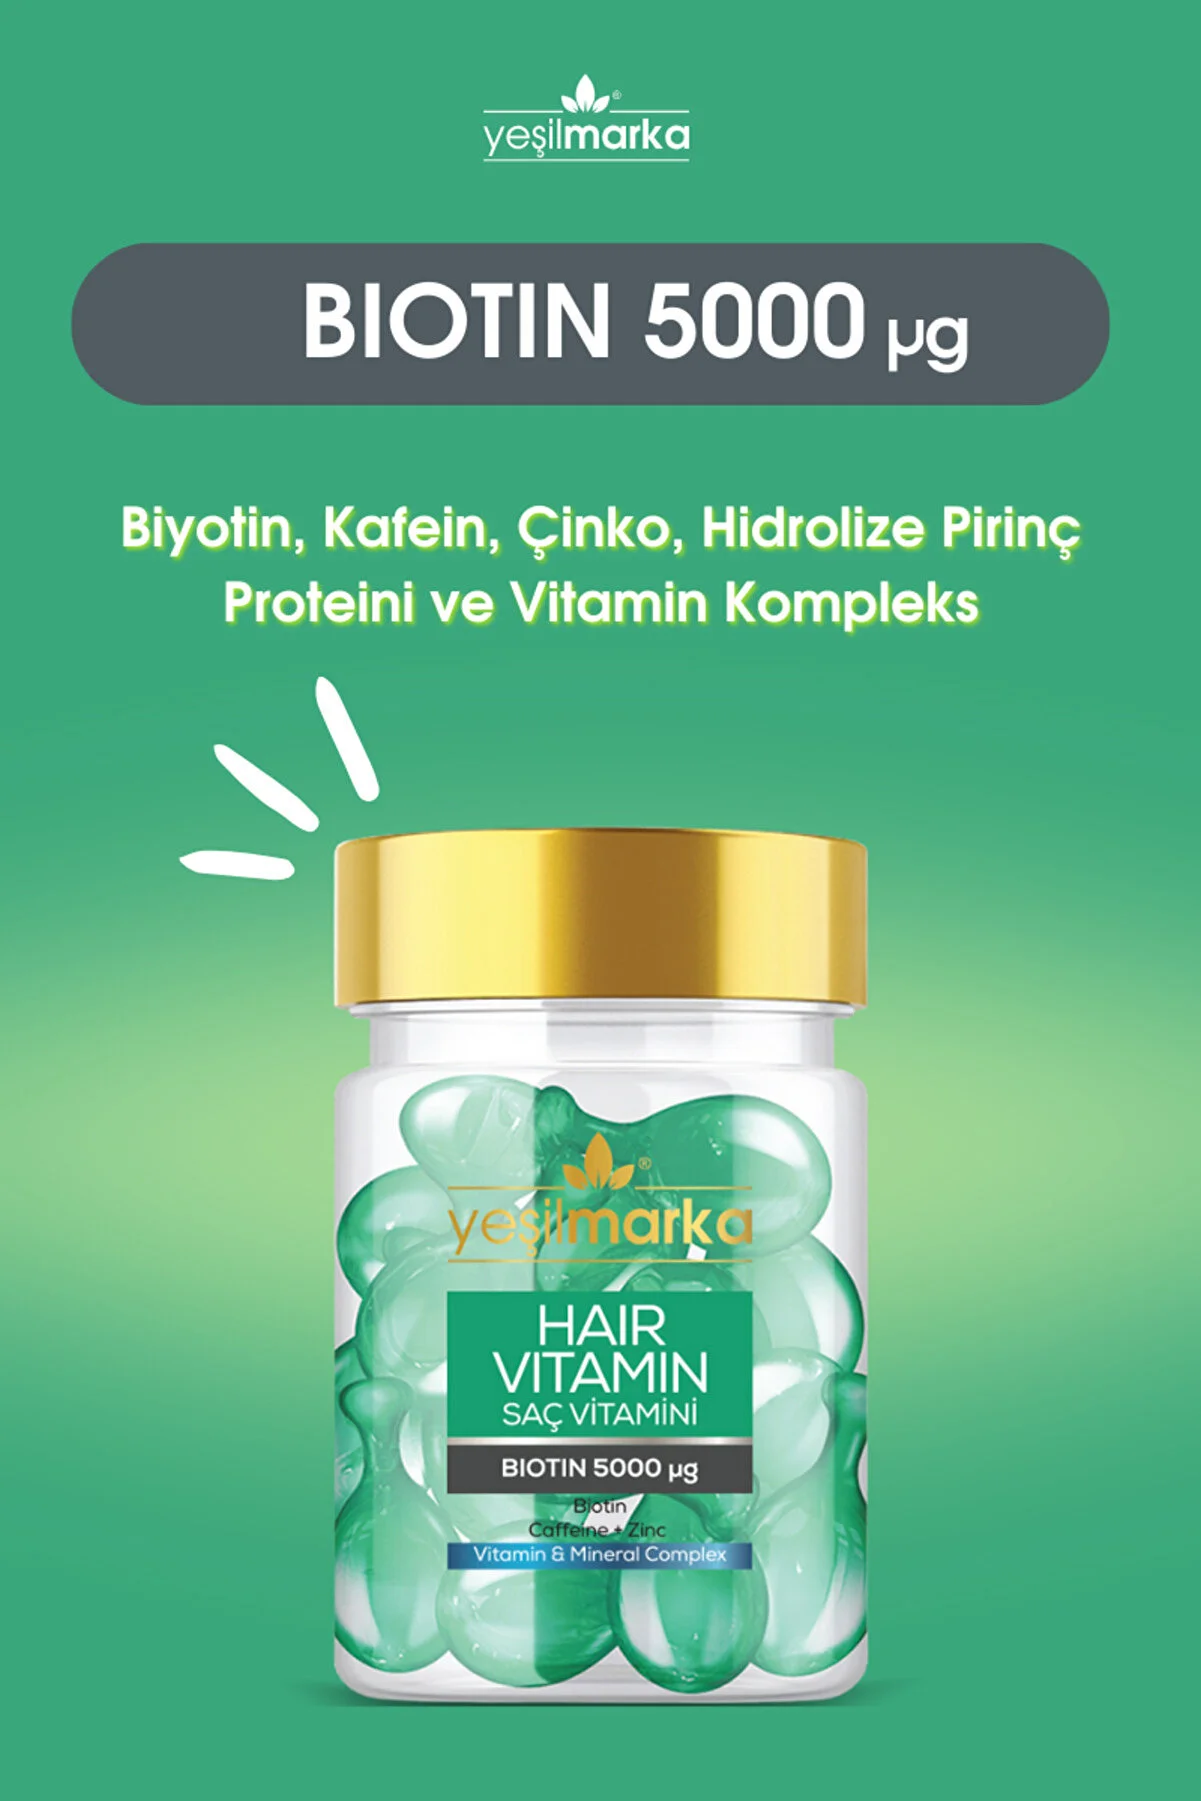 Yeşilmarka Saç Vitamini / Hair Vitamin - Biotin 5000 - Thumbnail